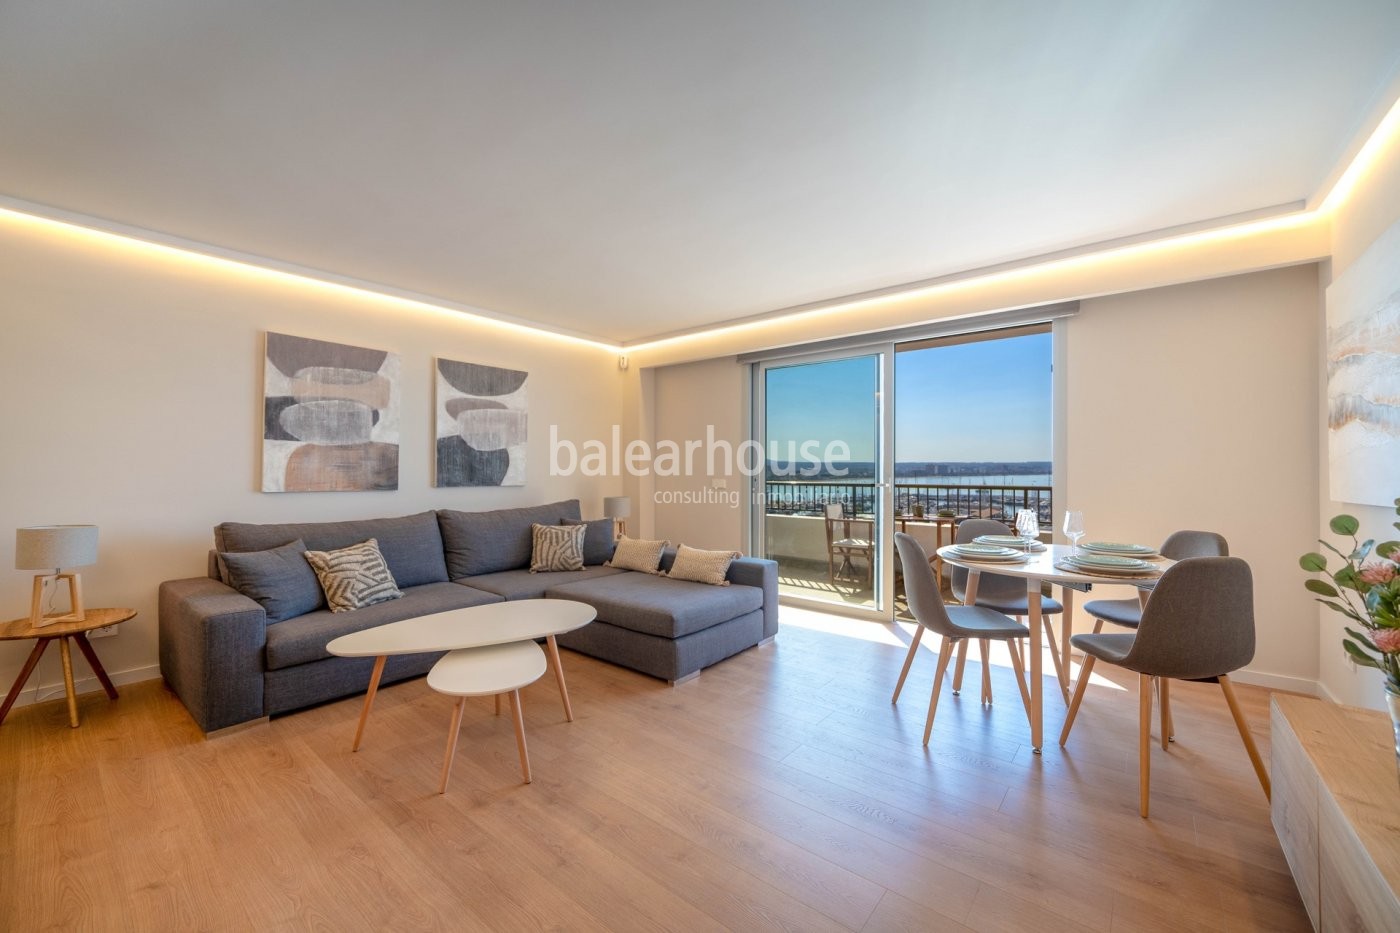 Atemberaubender Meerblick in diesem Penthouse in erster Reihe mit moderner Einrichtung in Palma.